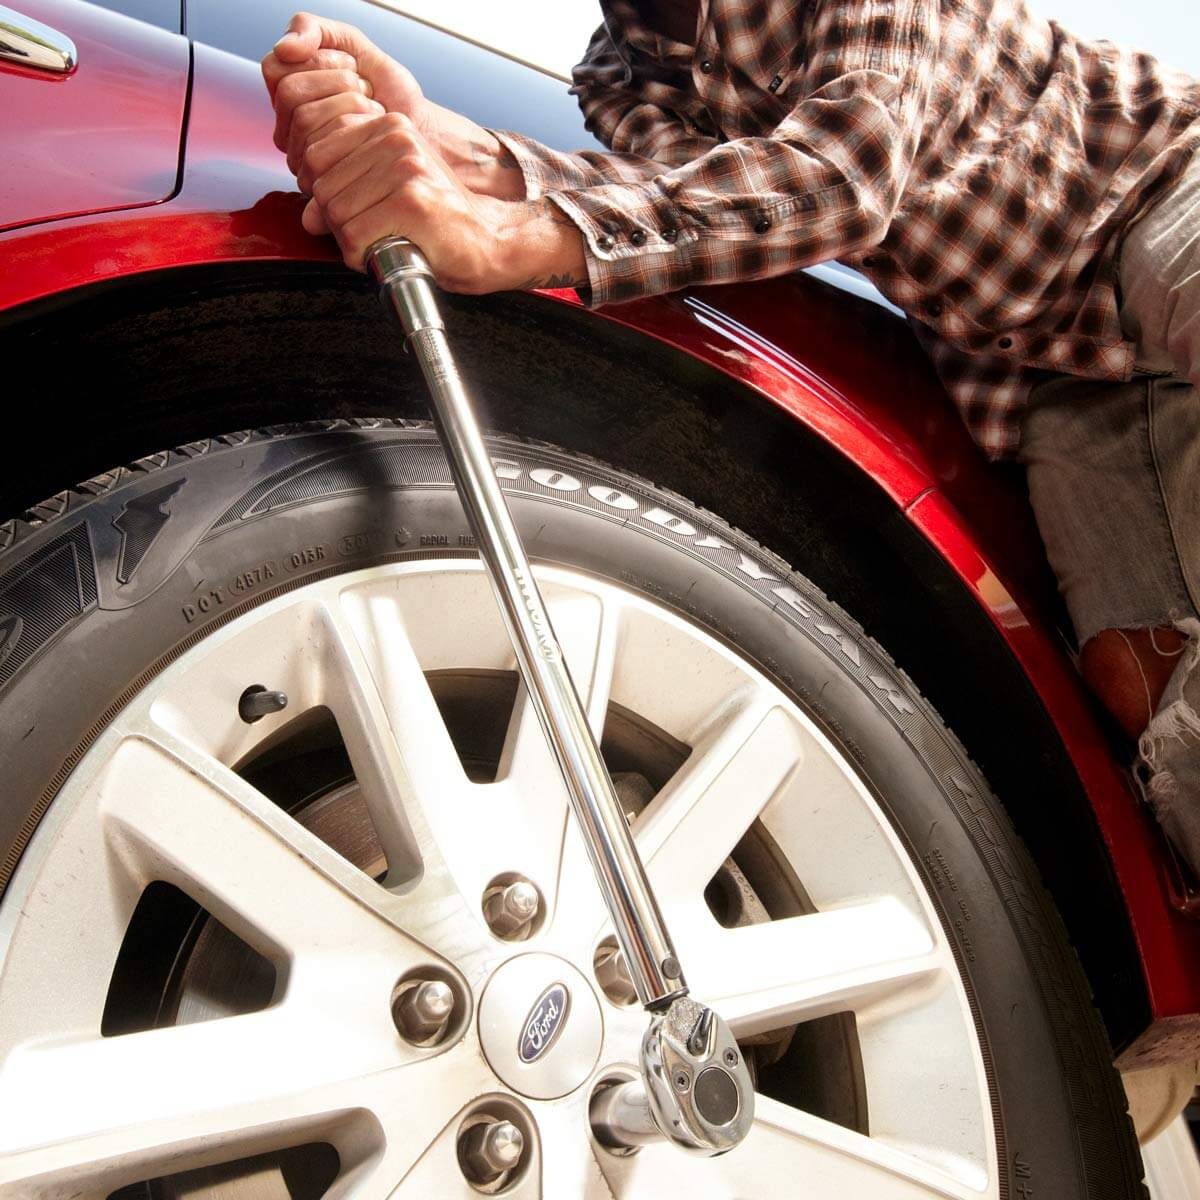 35 Automotive Maintenance Tasks You Can DIY